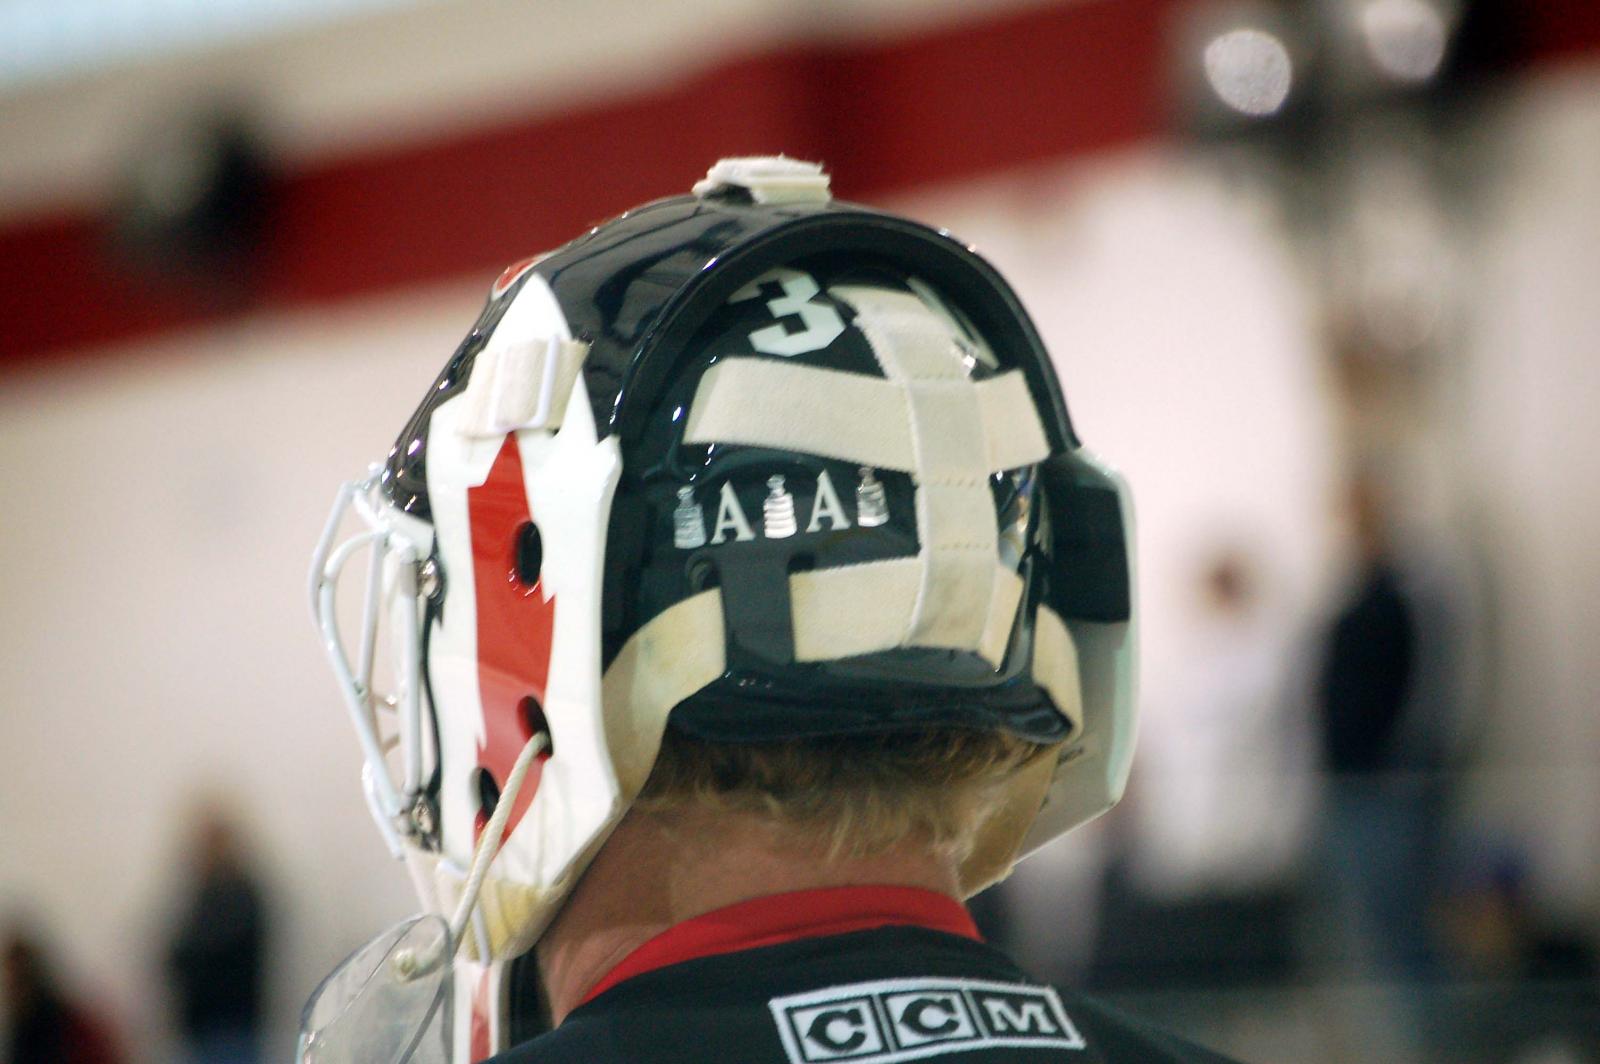 Back of Marty's helmet 9/15/07